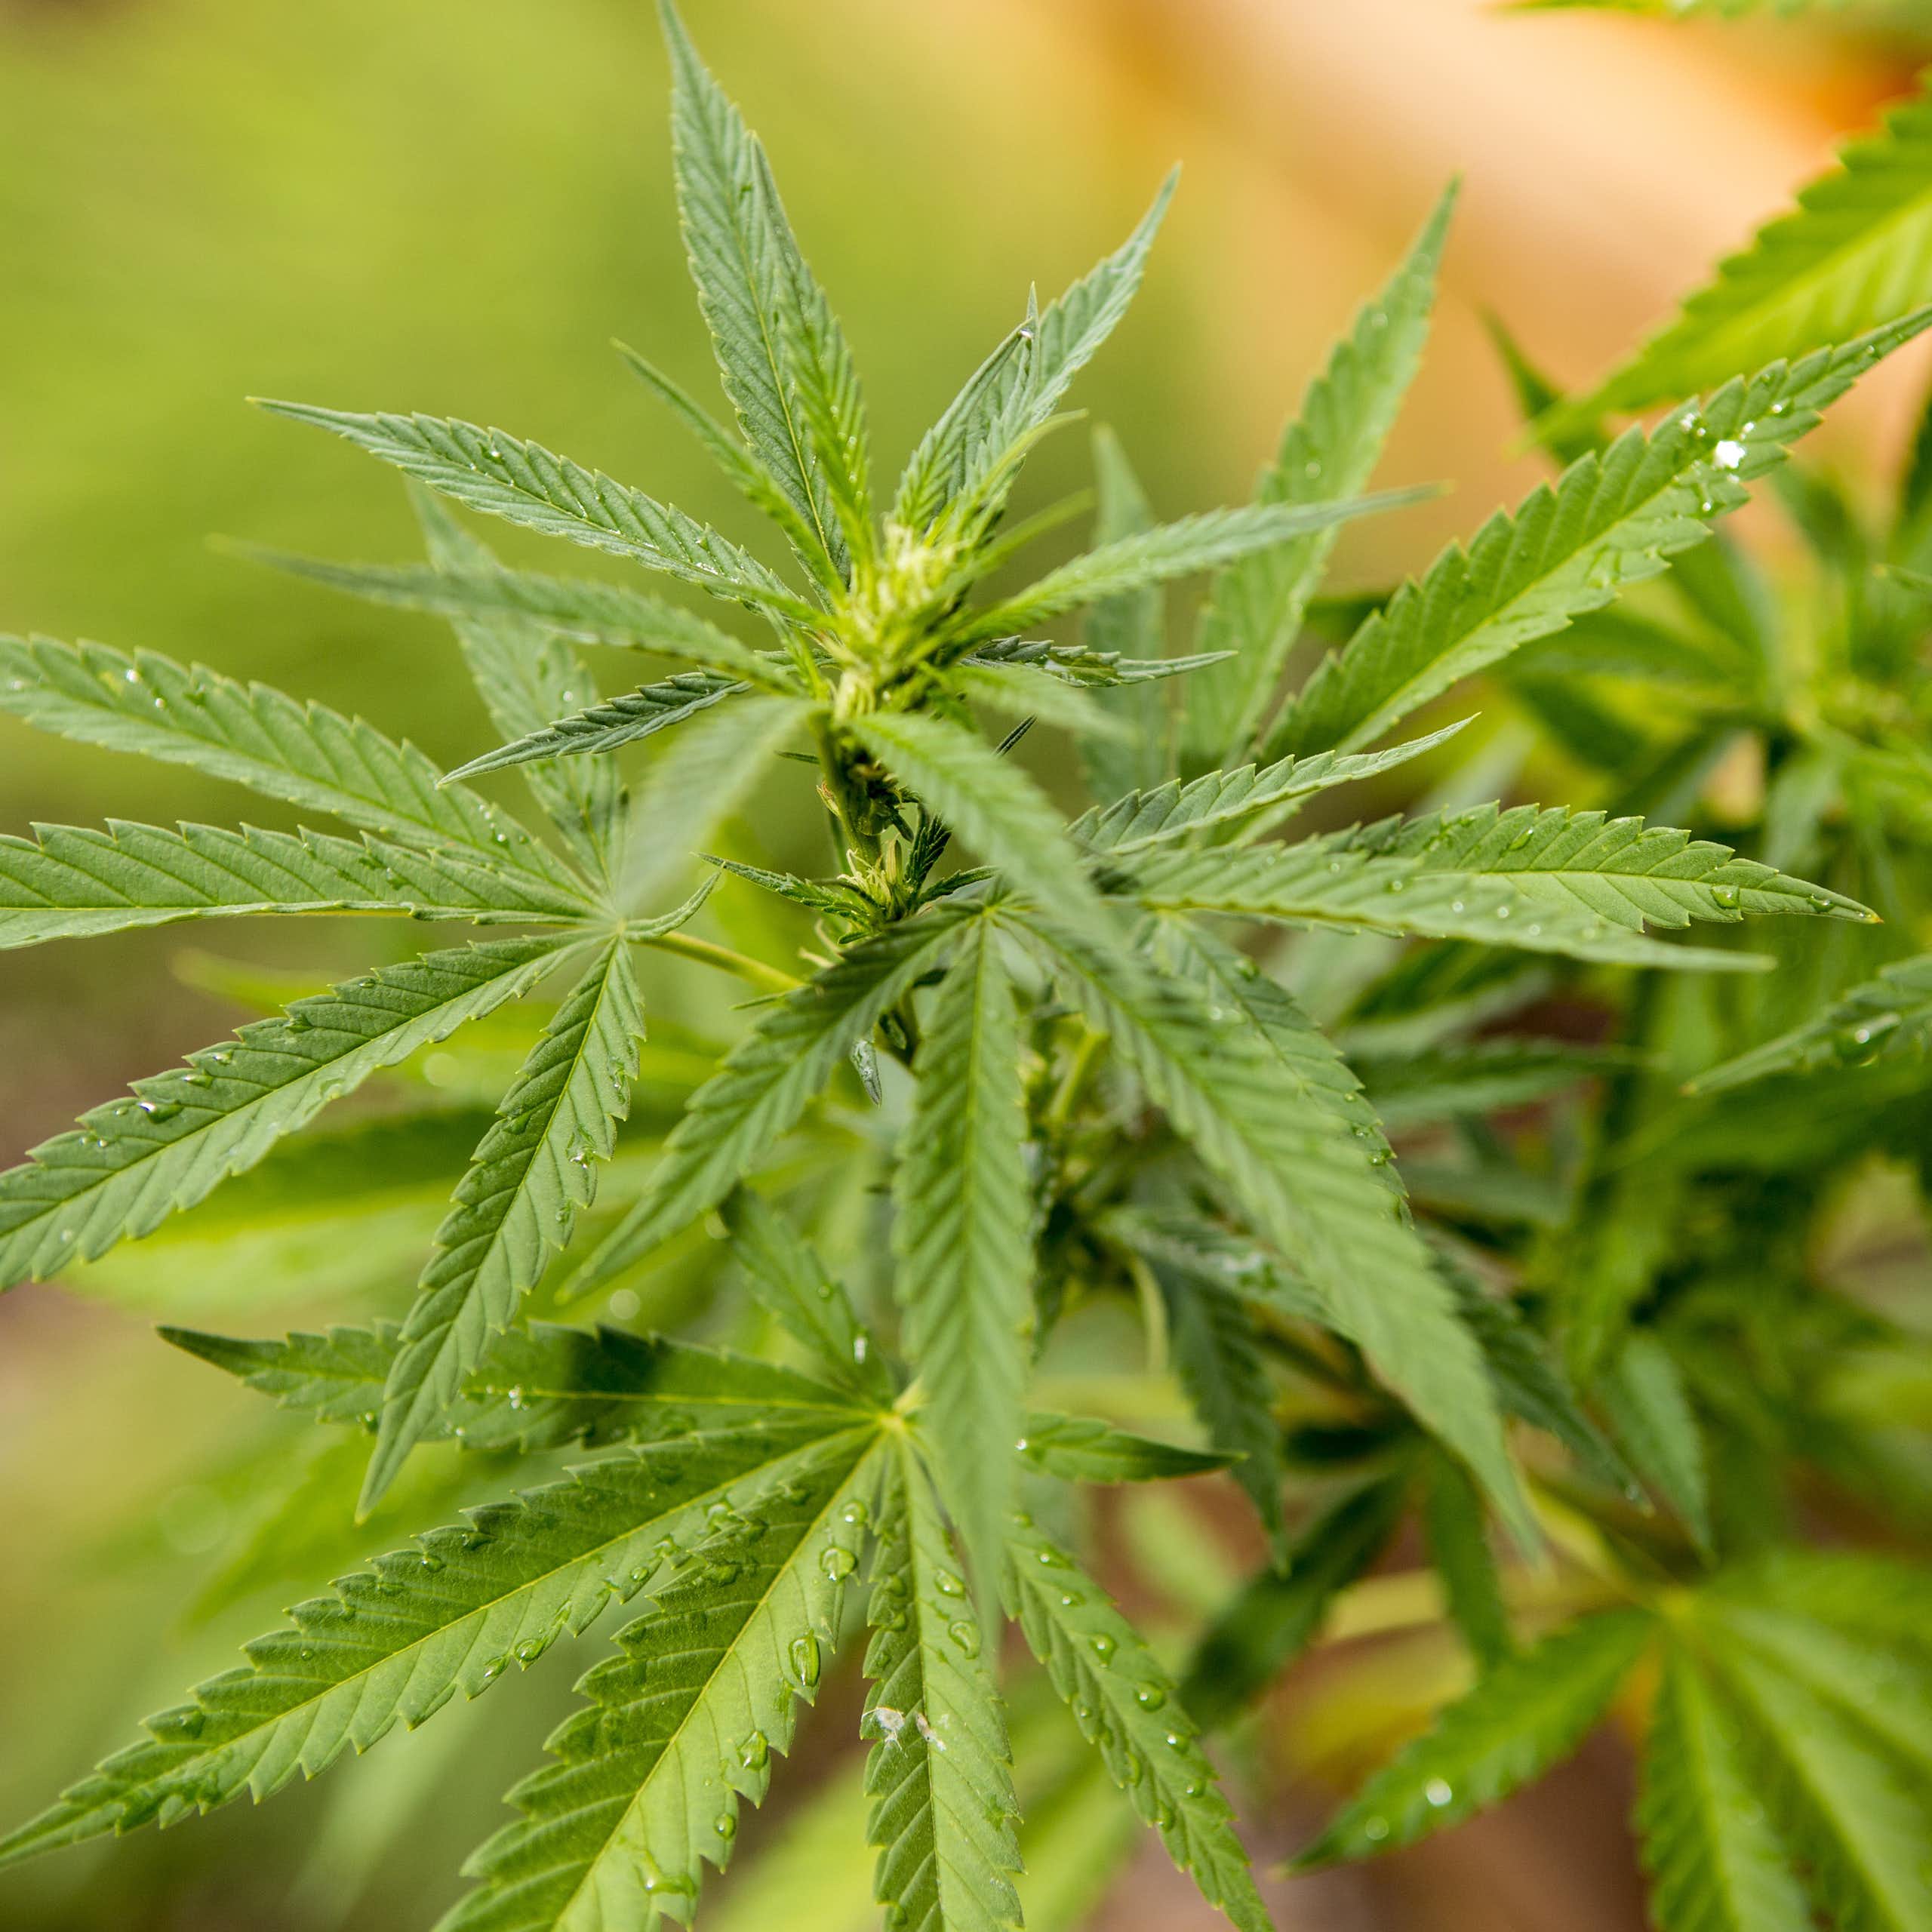 A bright green cannabis plant grows in a garden.